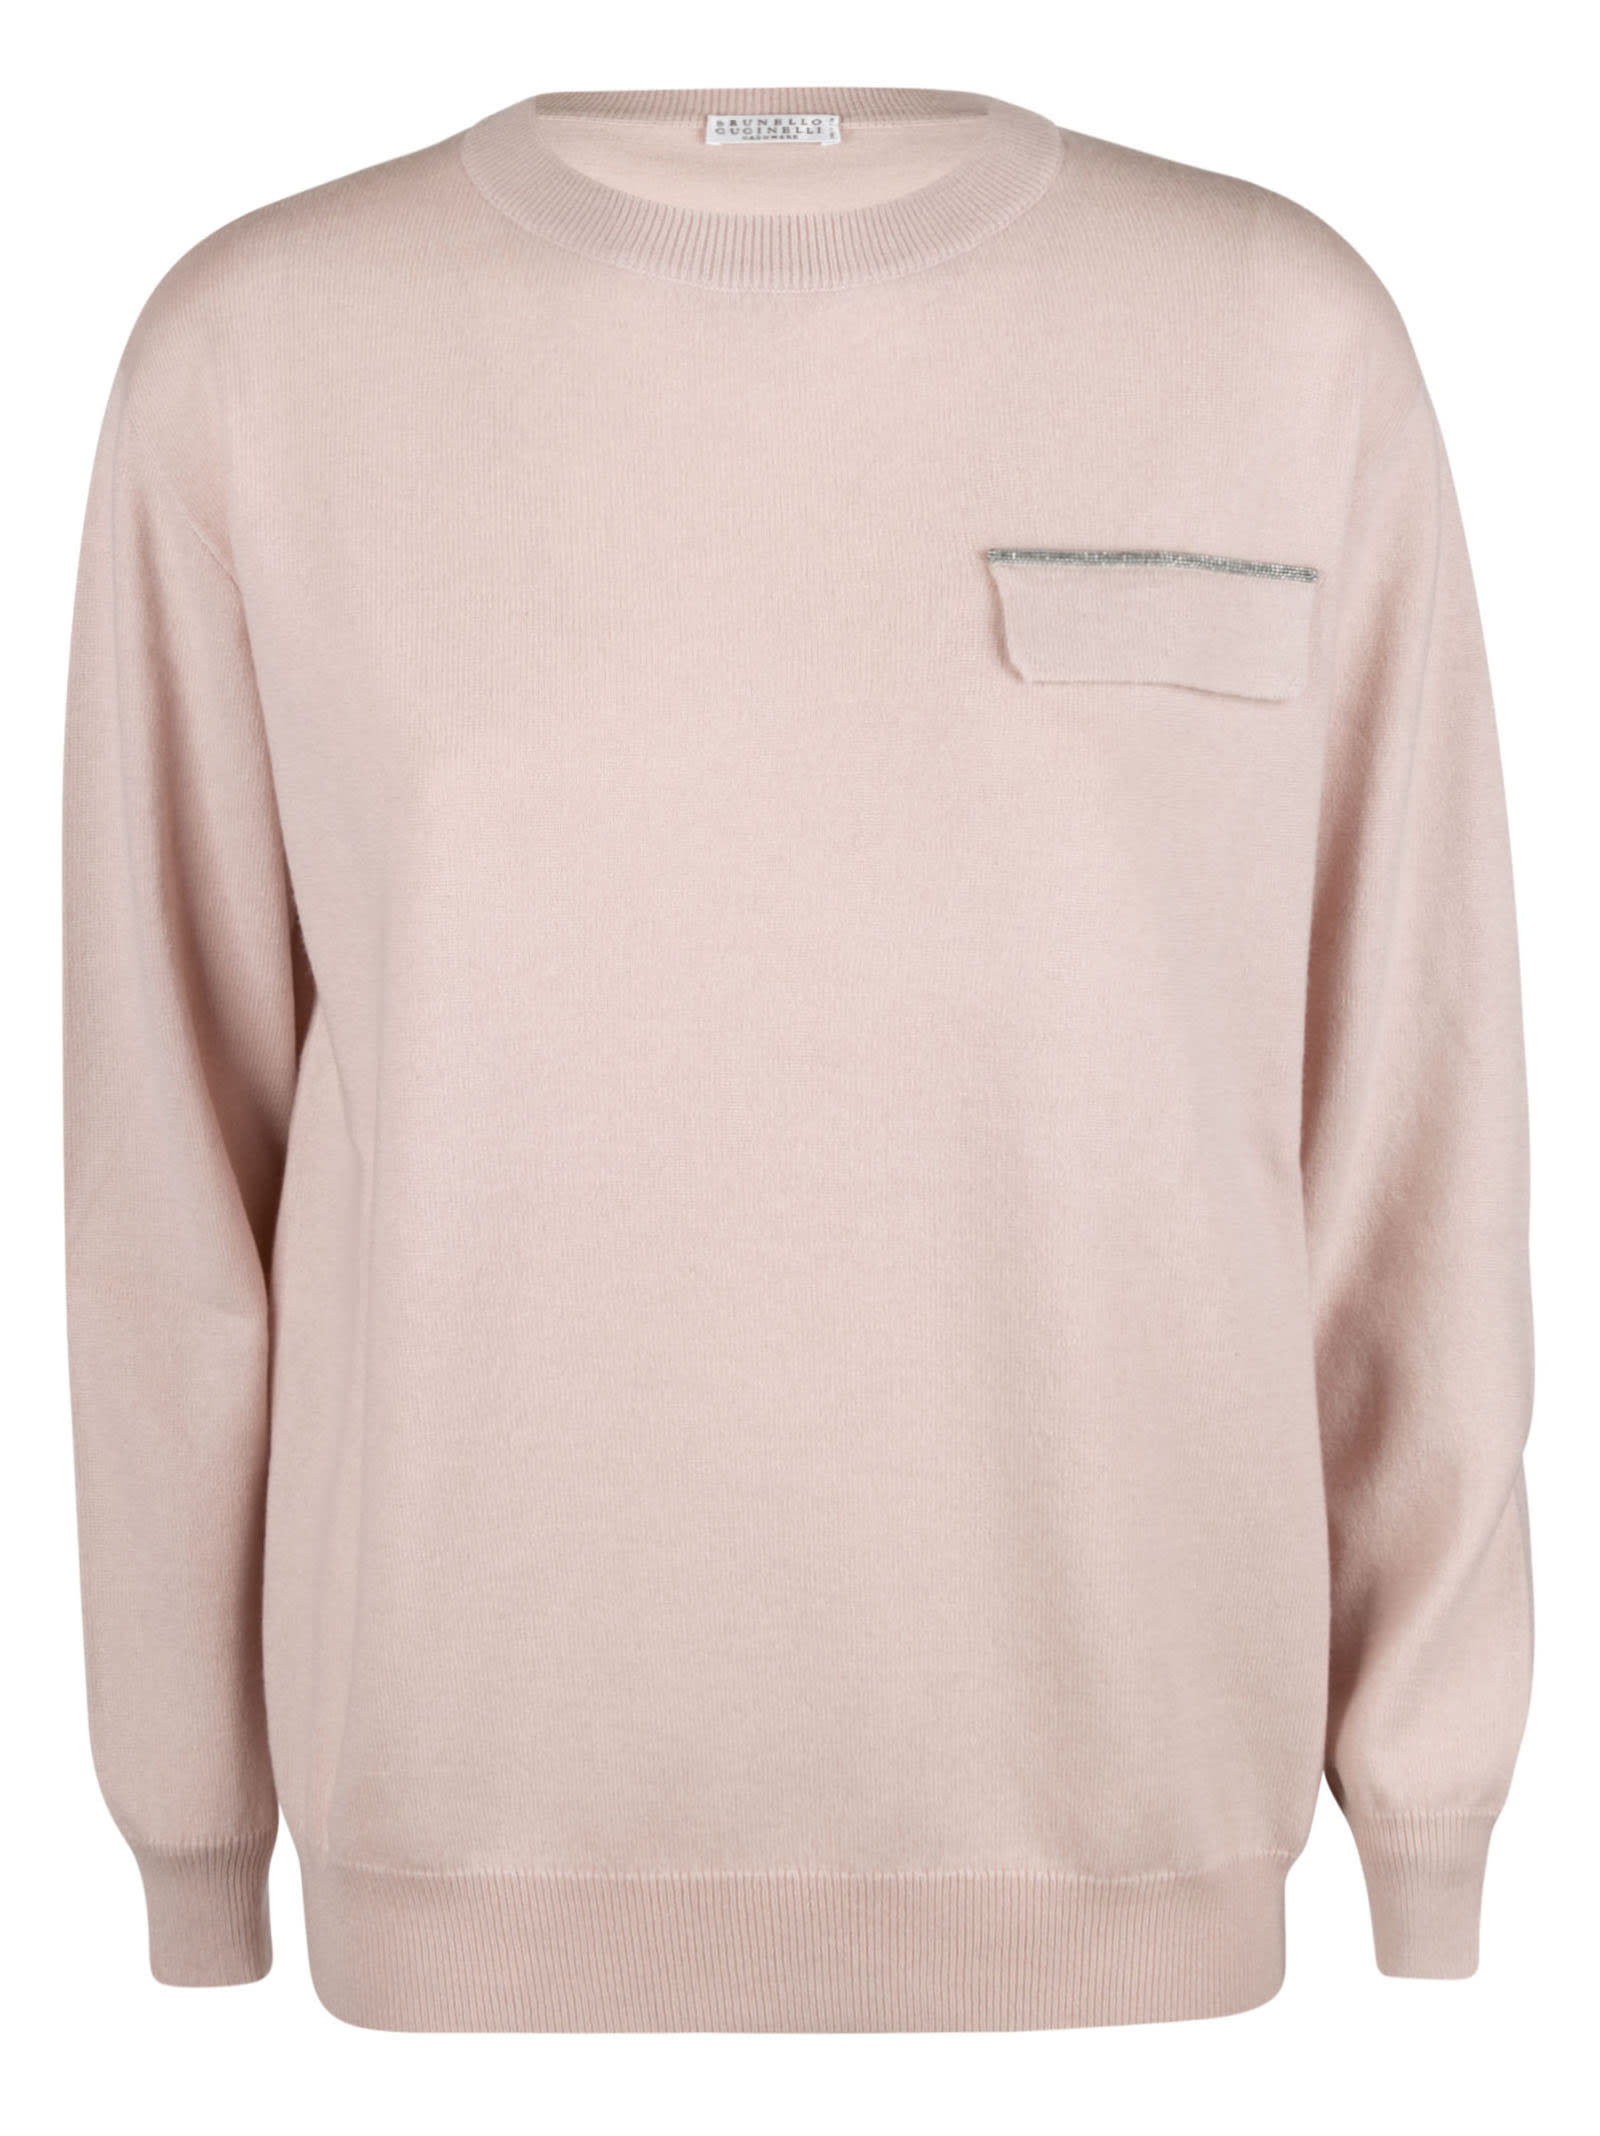 Brunello Cucinelli Round Neck Embellished Plain Sweater